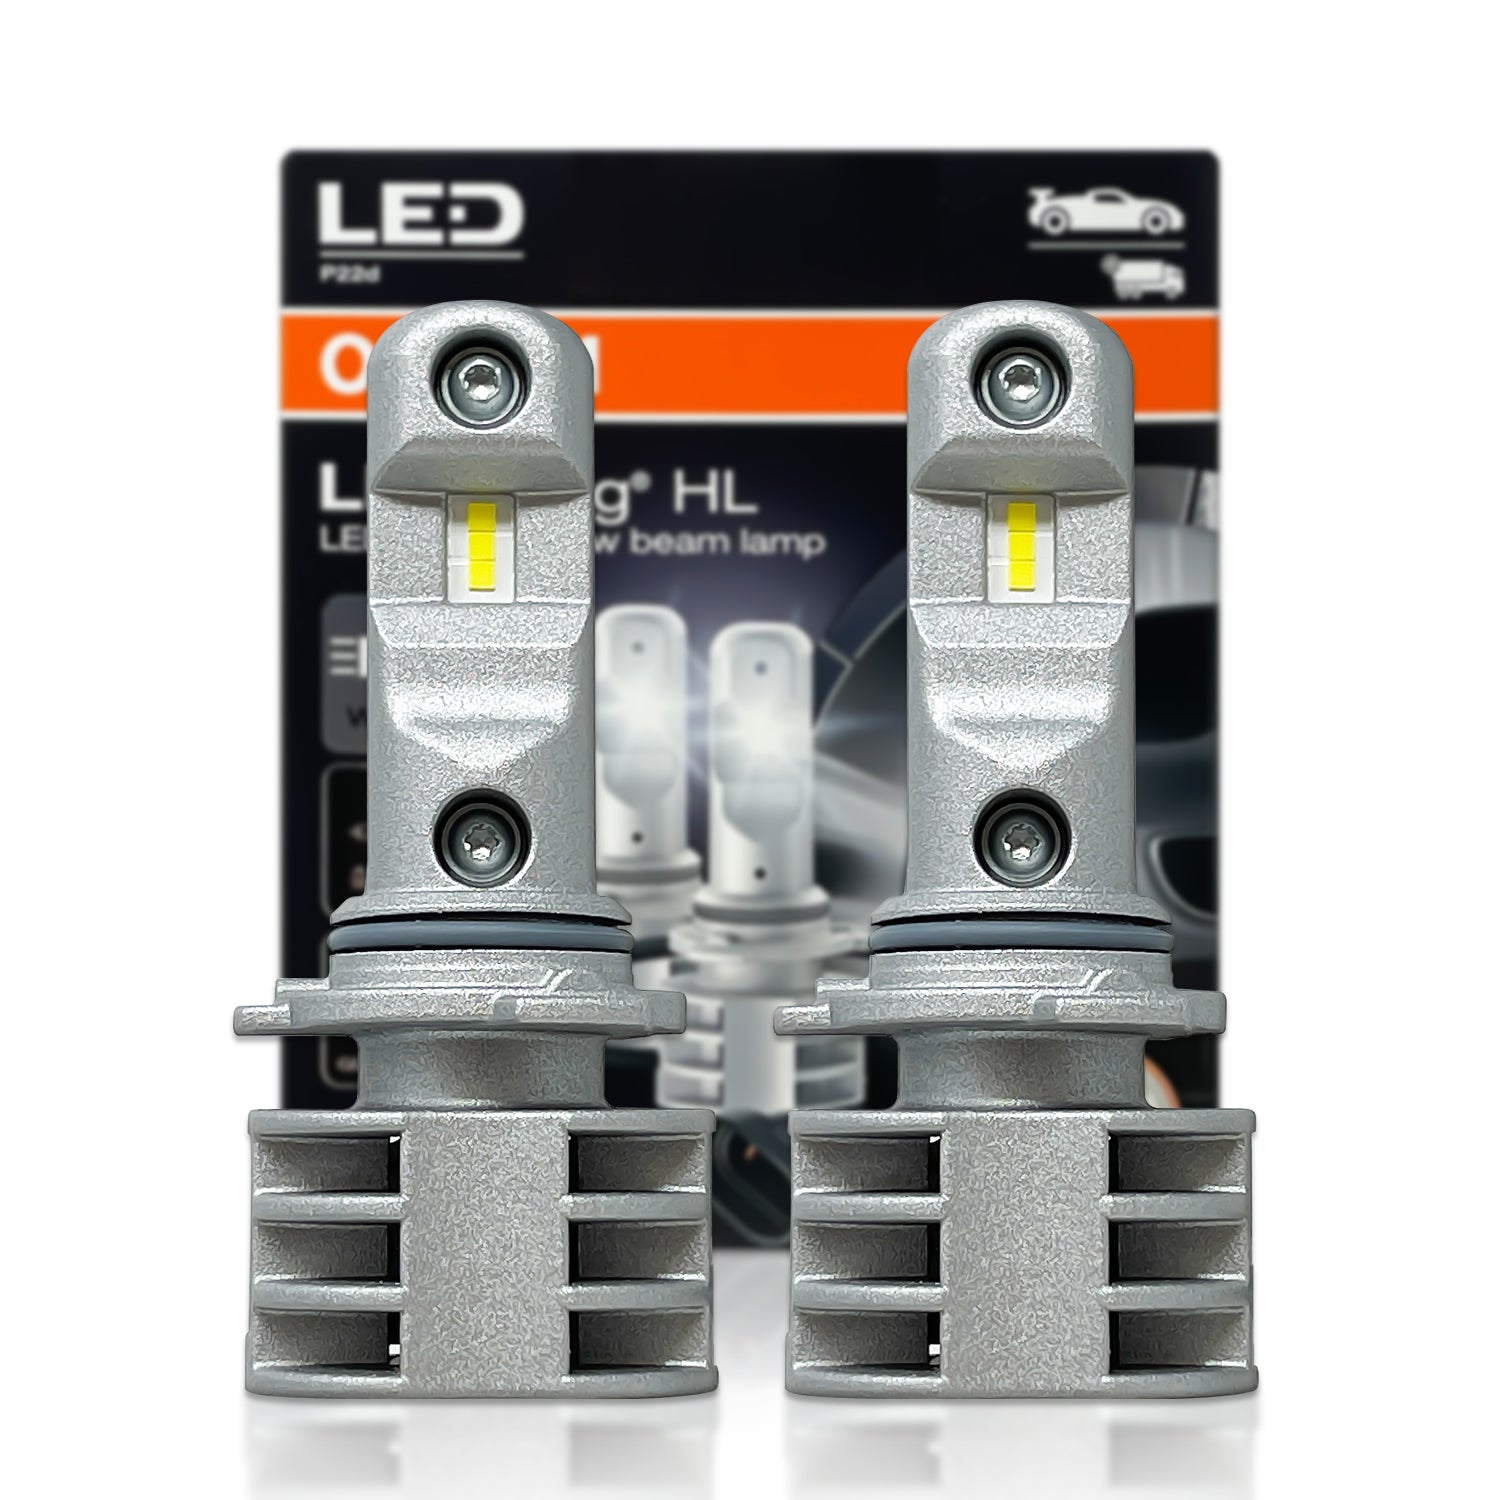 Osram Ledriving H15 Easy 64176DWESY LED Bulb – HID CONCEPT